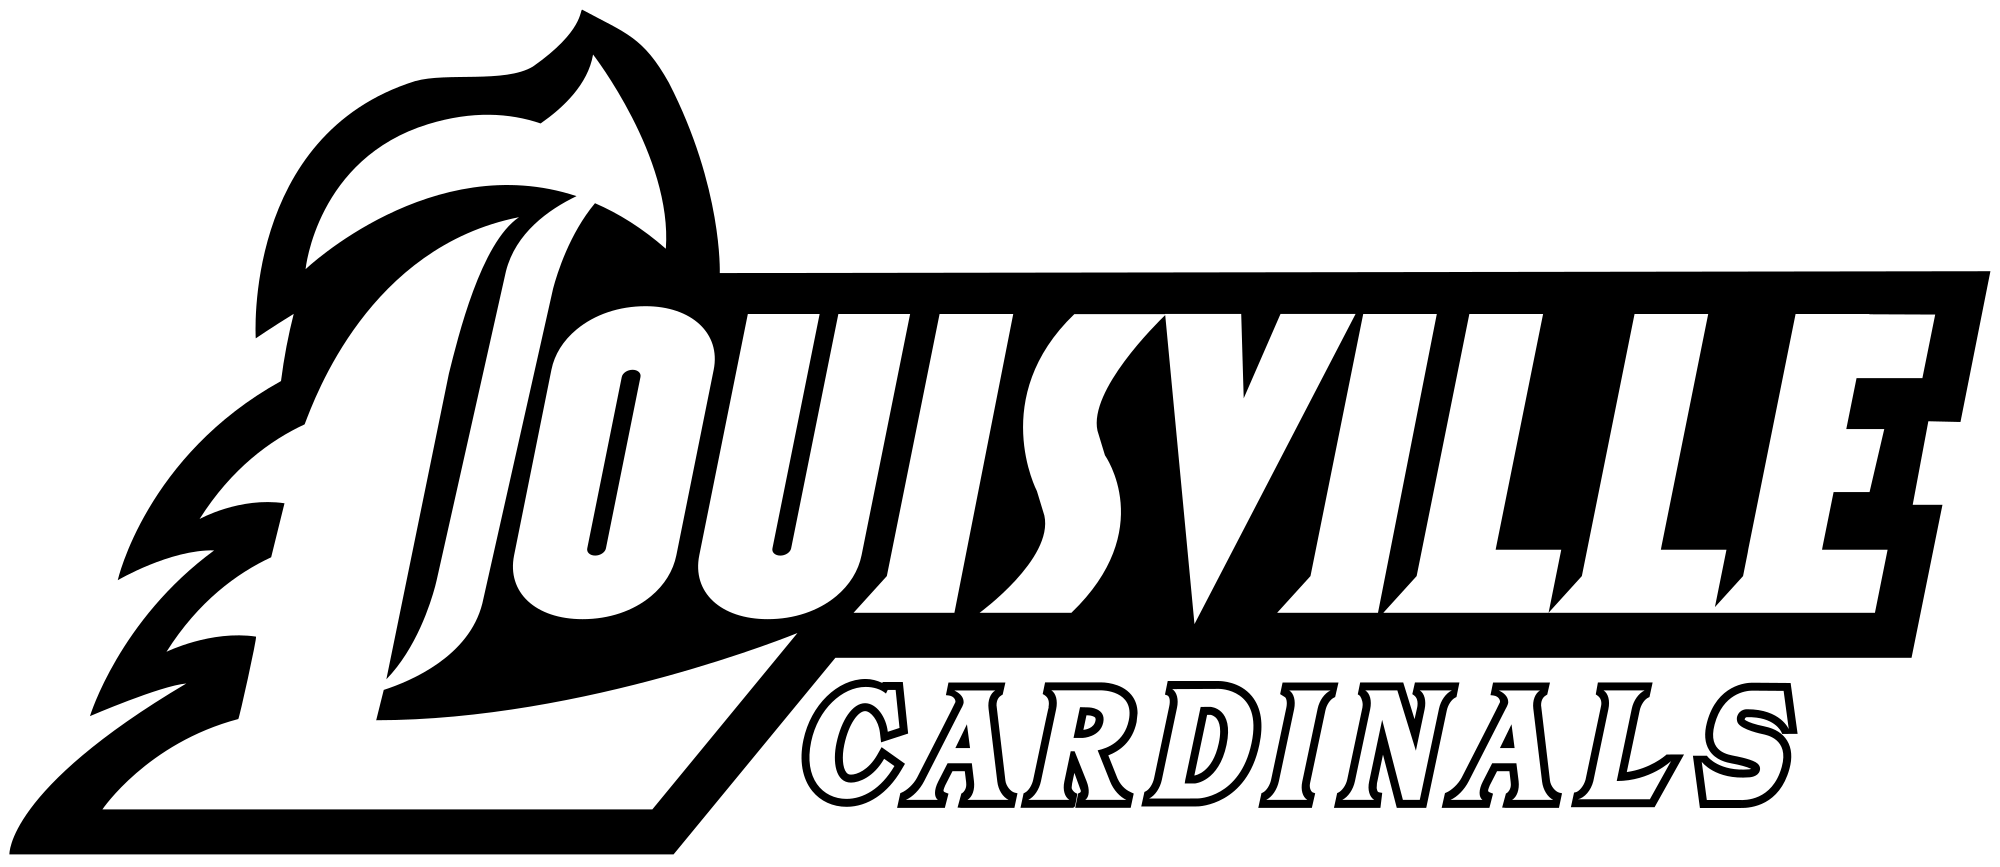 Louisville Logo - File:Louisville Cardinals text logo.svg - Wikimedia Commons